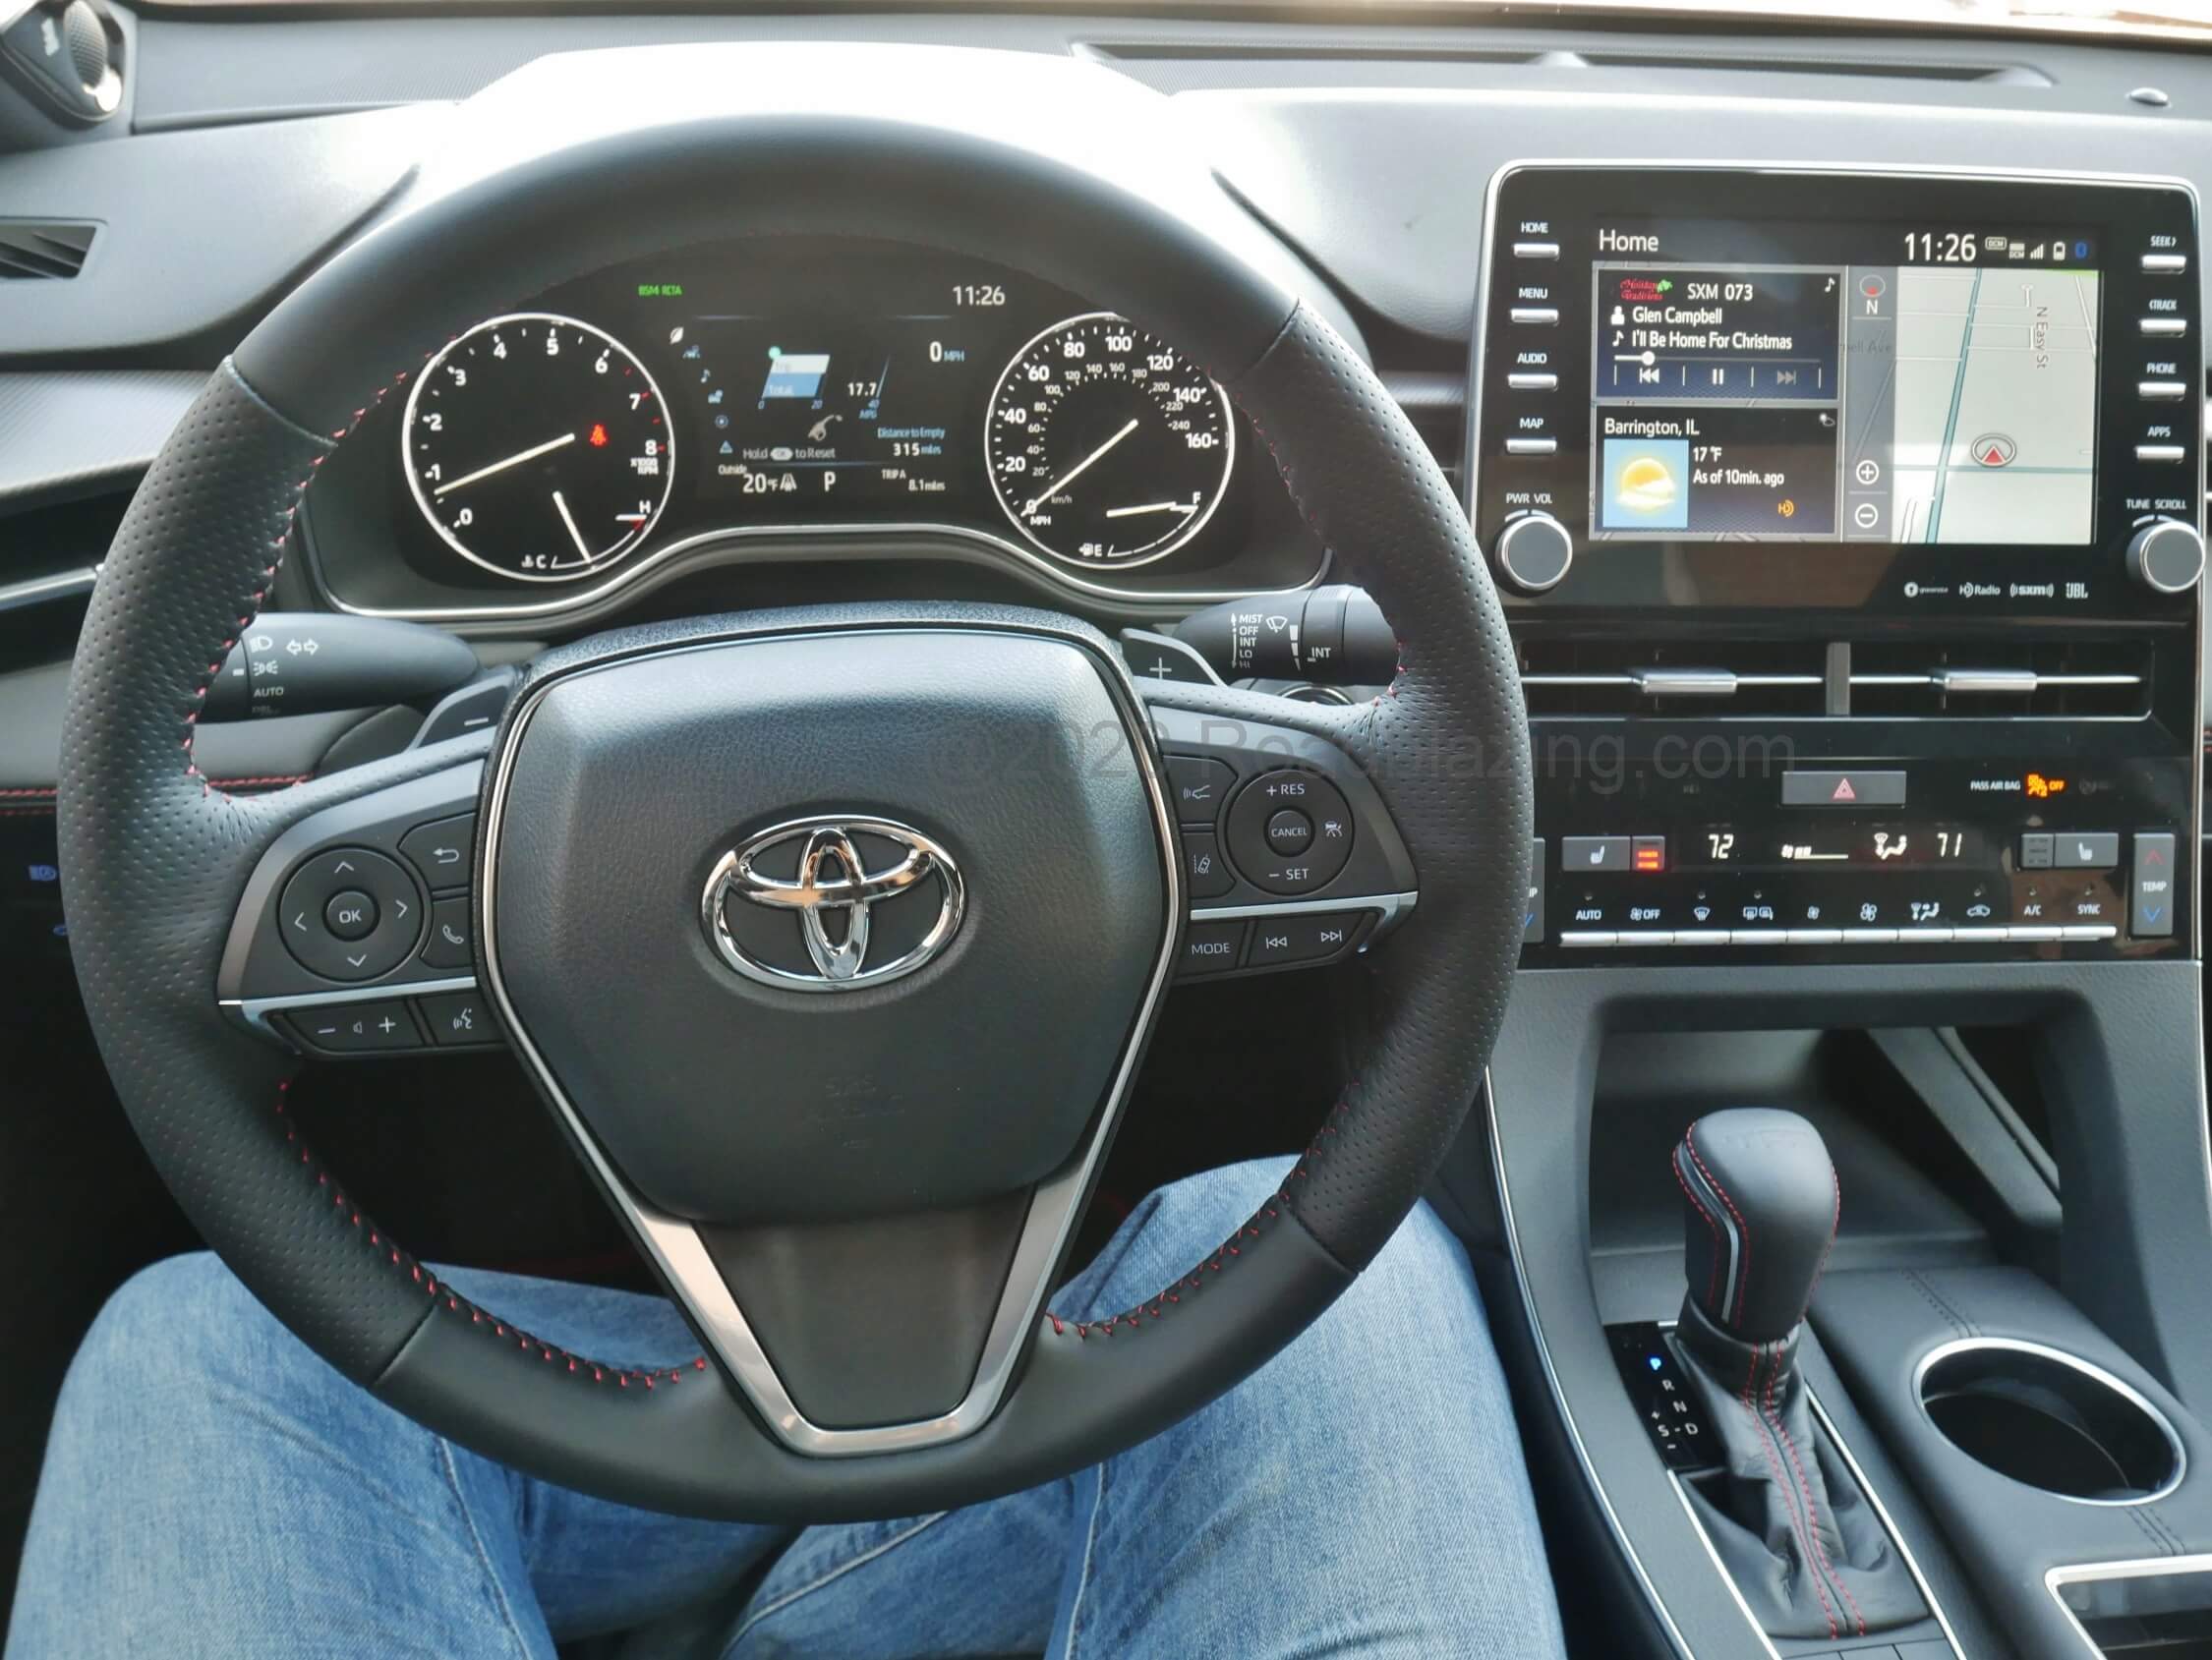 2020 Toyota Avalon TRD: cockpit